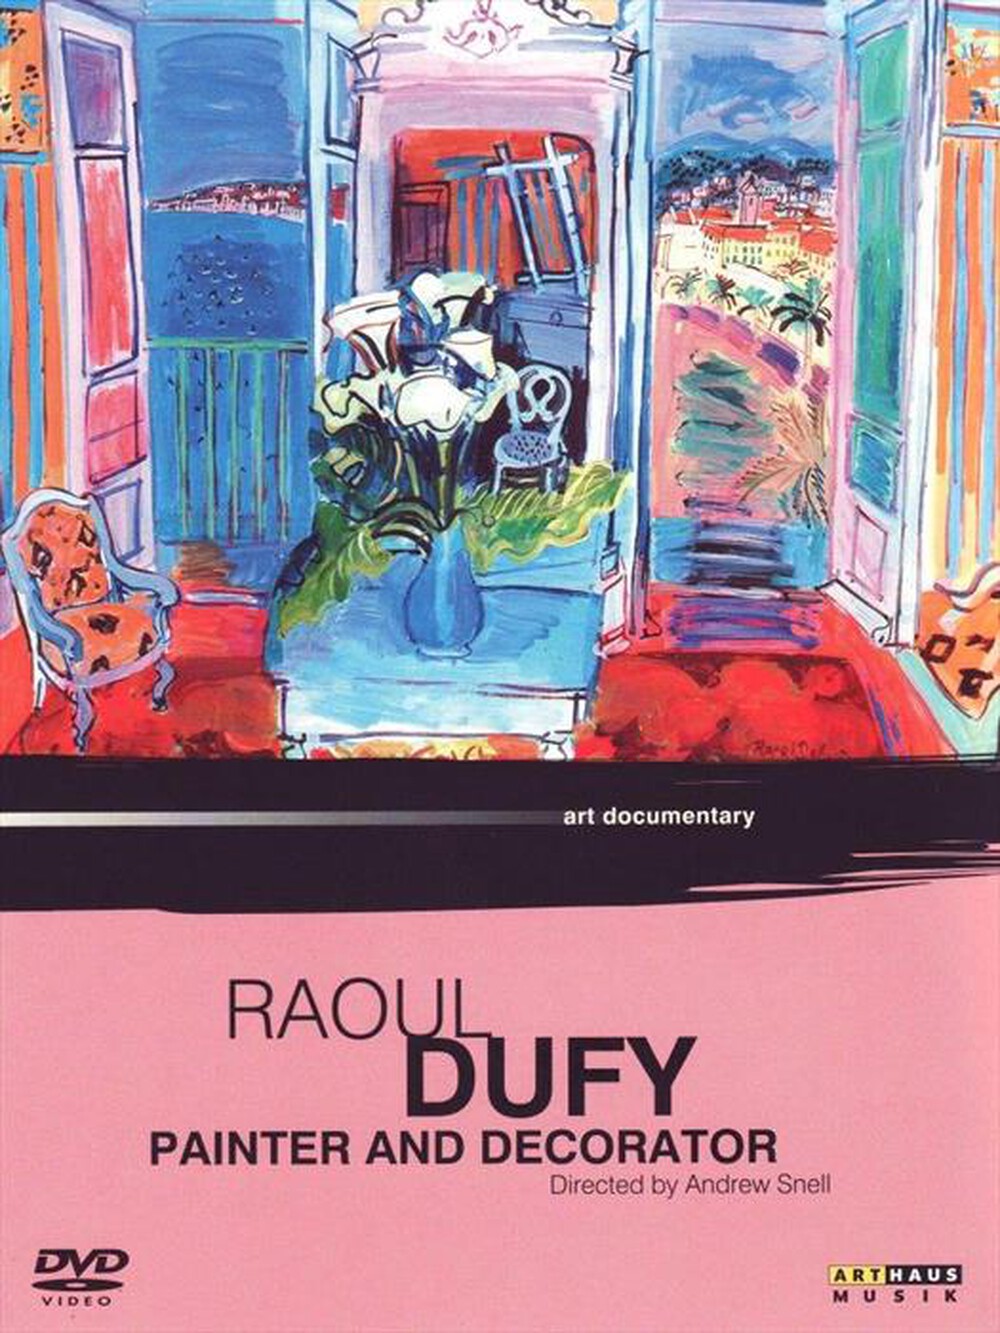 "Arthaus Musik - Raoul Dufy - Painter And Decorator"